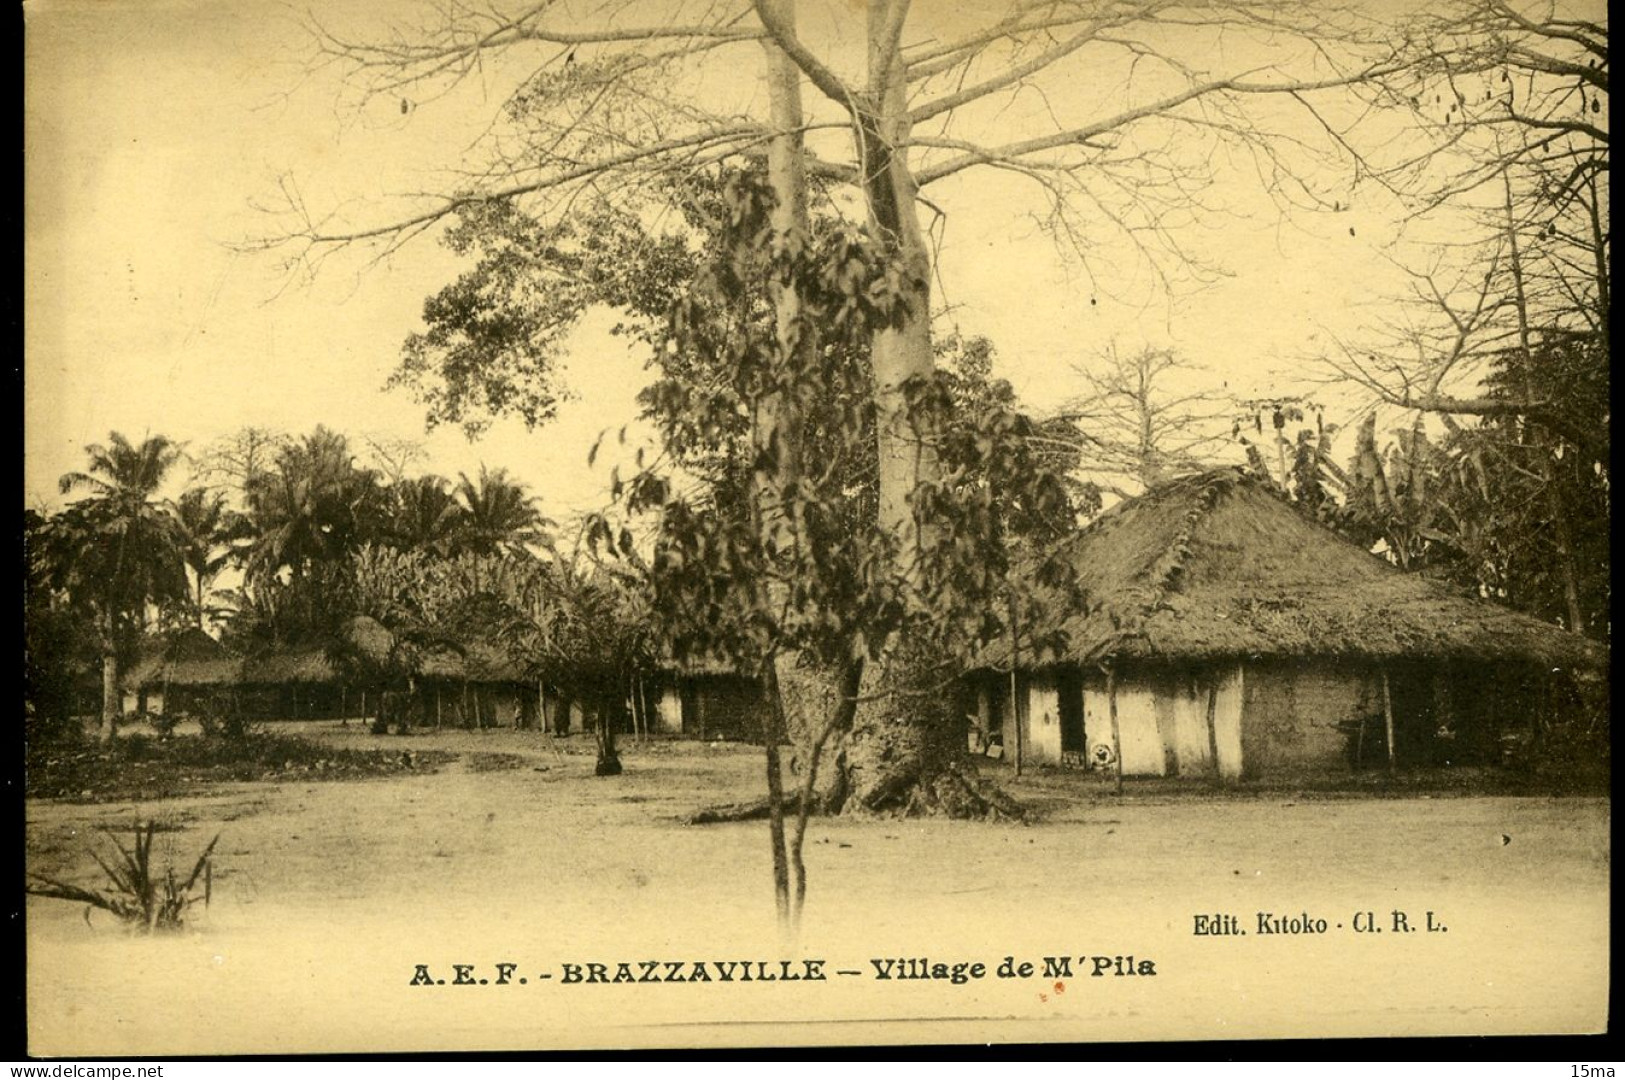 BRAZZAVILLE AEF Village De M'Pila Kitoko RL - Brazzaville